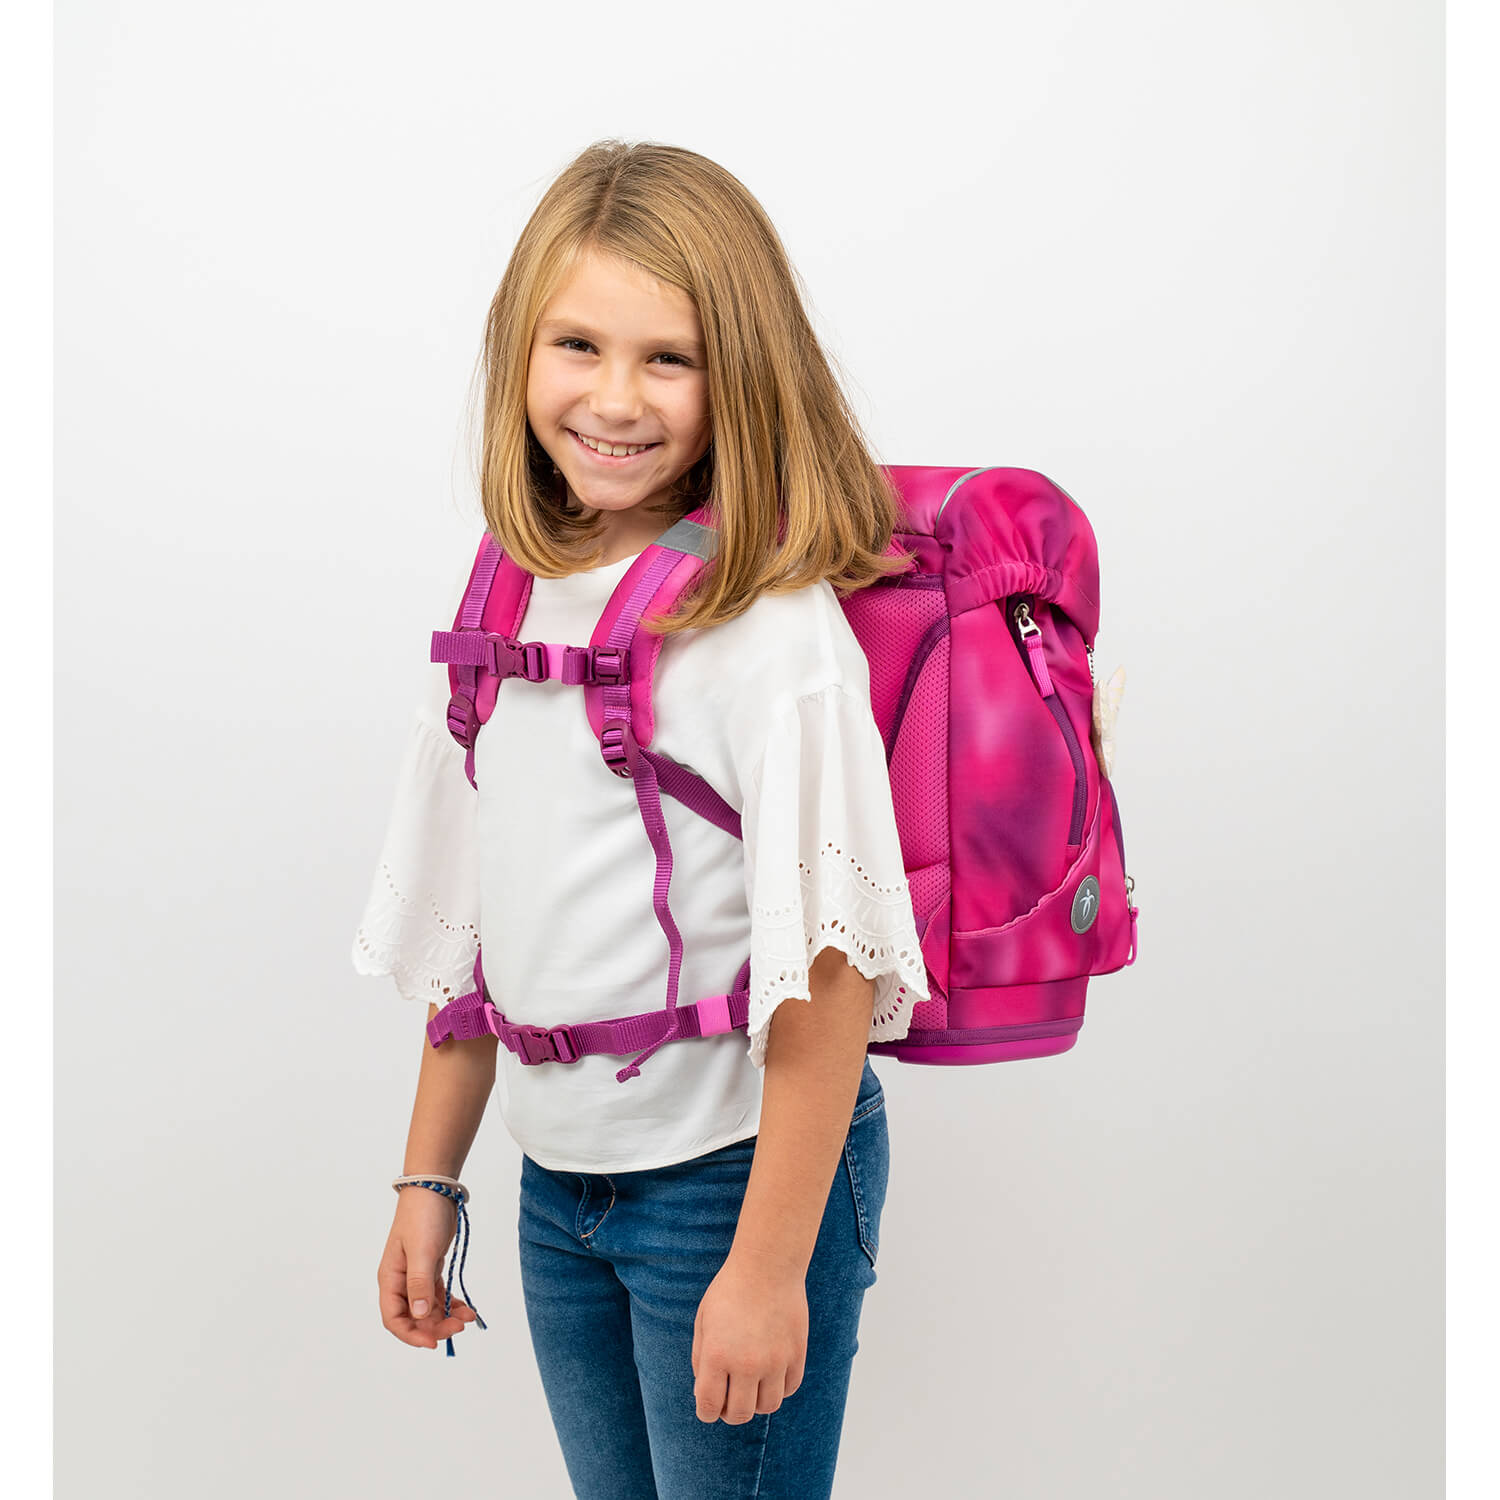 Motion Shiny Pink schoolbag set 6 pcs